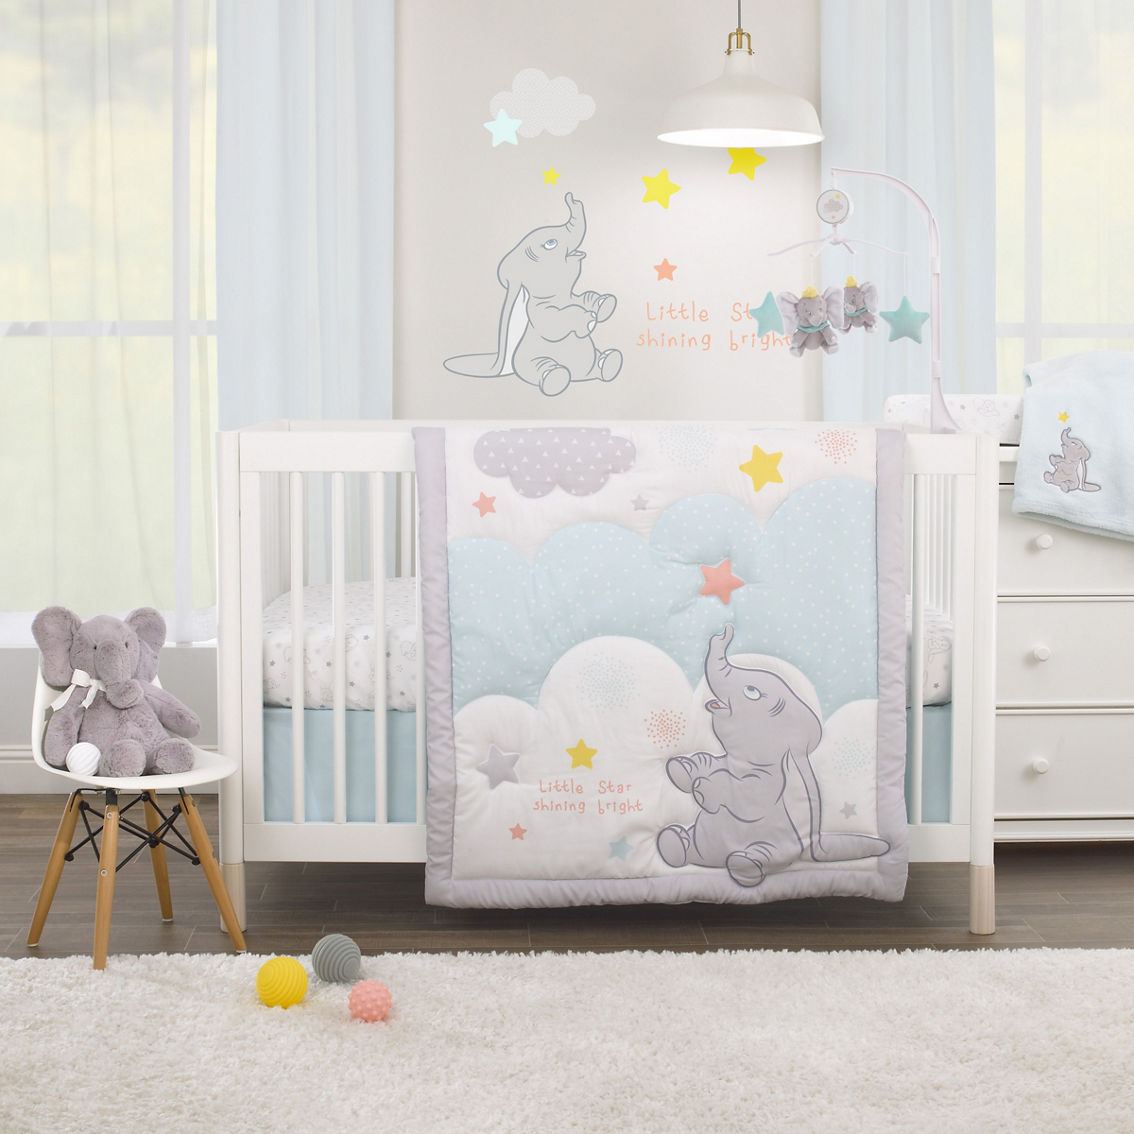 Disney Dumbo Shine Bright Little Star Fitted Crib Sheet - Image 2 of 2